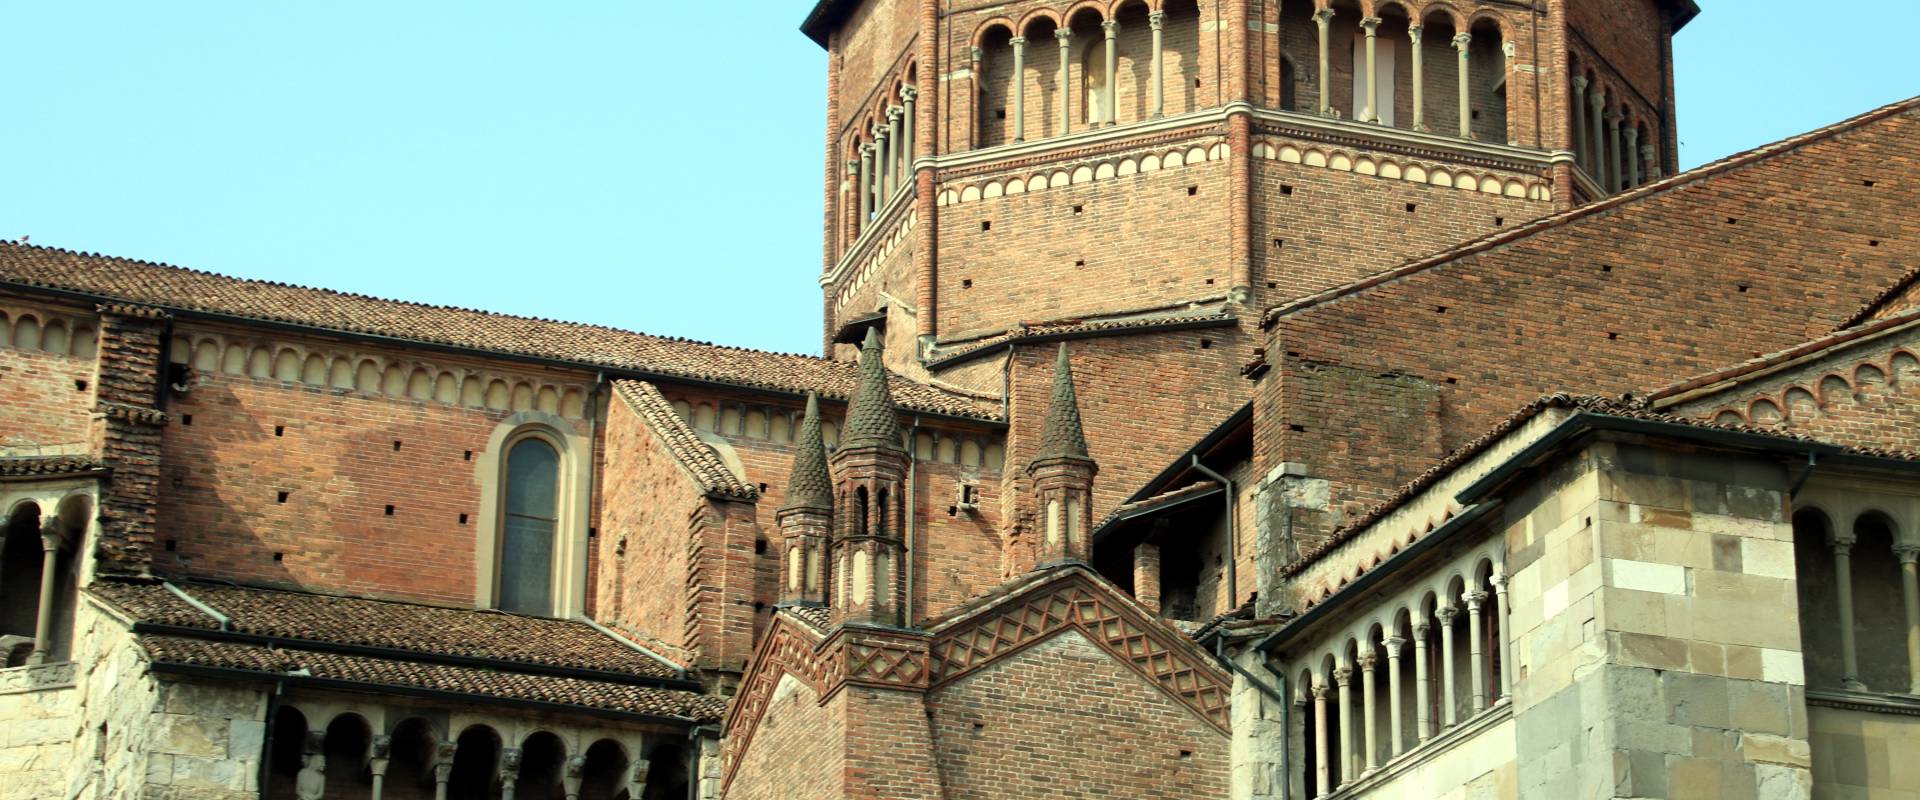 Duomo di Piacenza, tiburio 01 foto di Mongolo1984